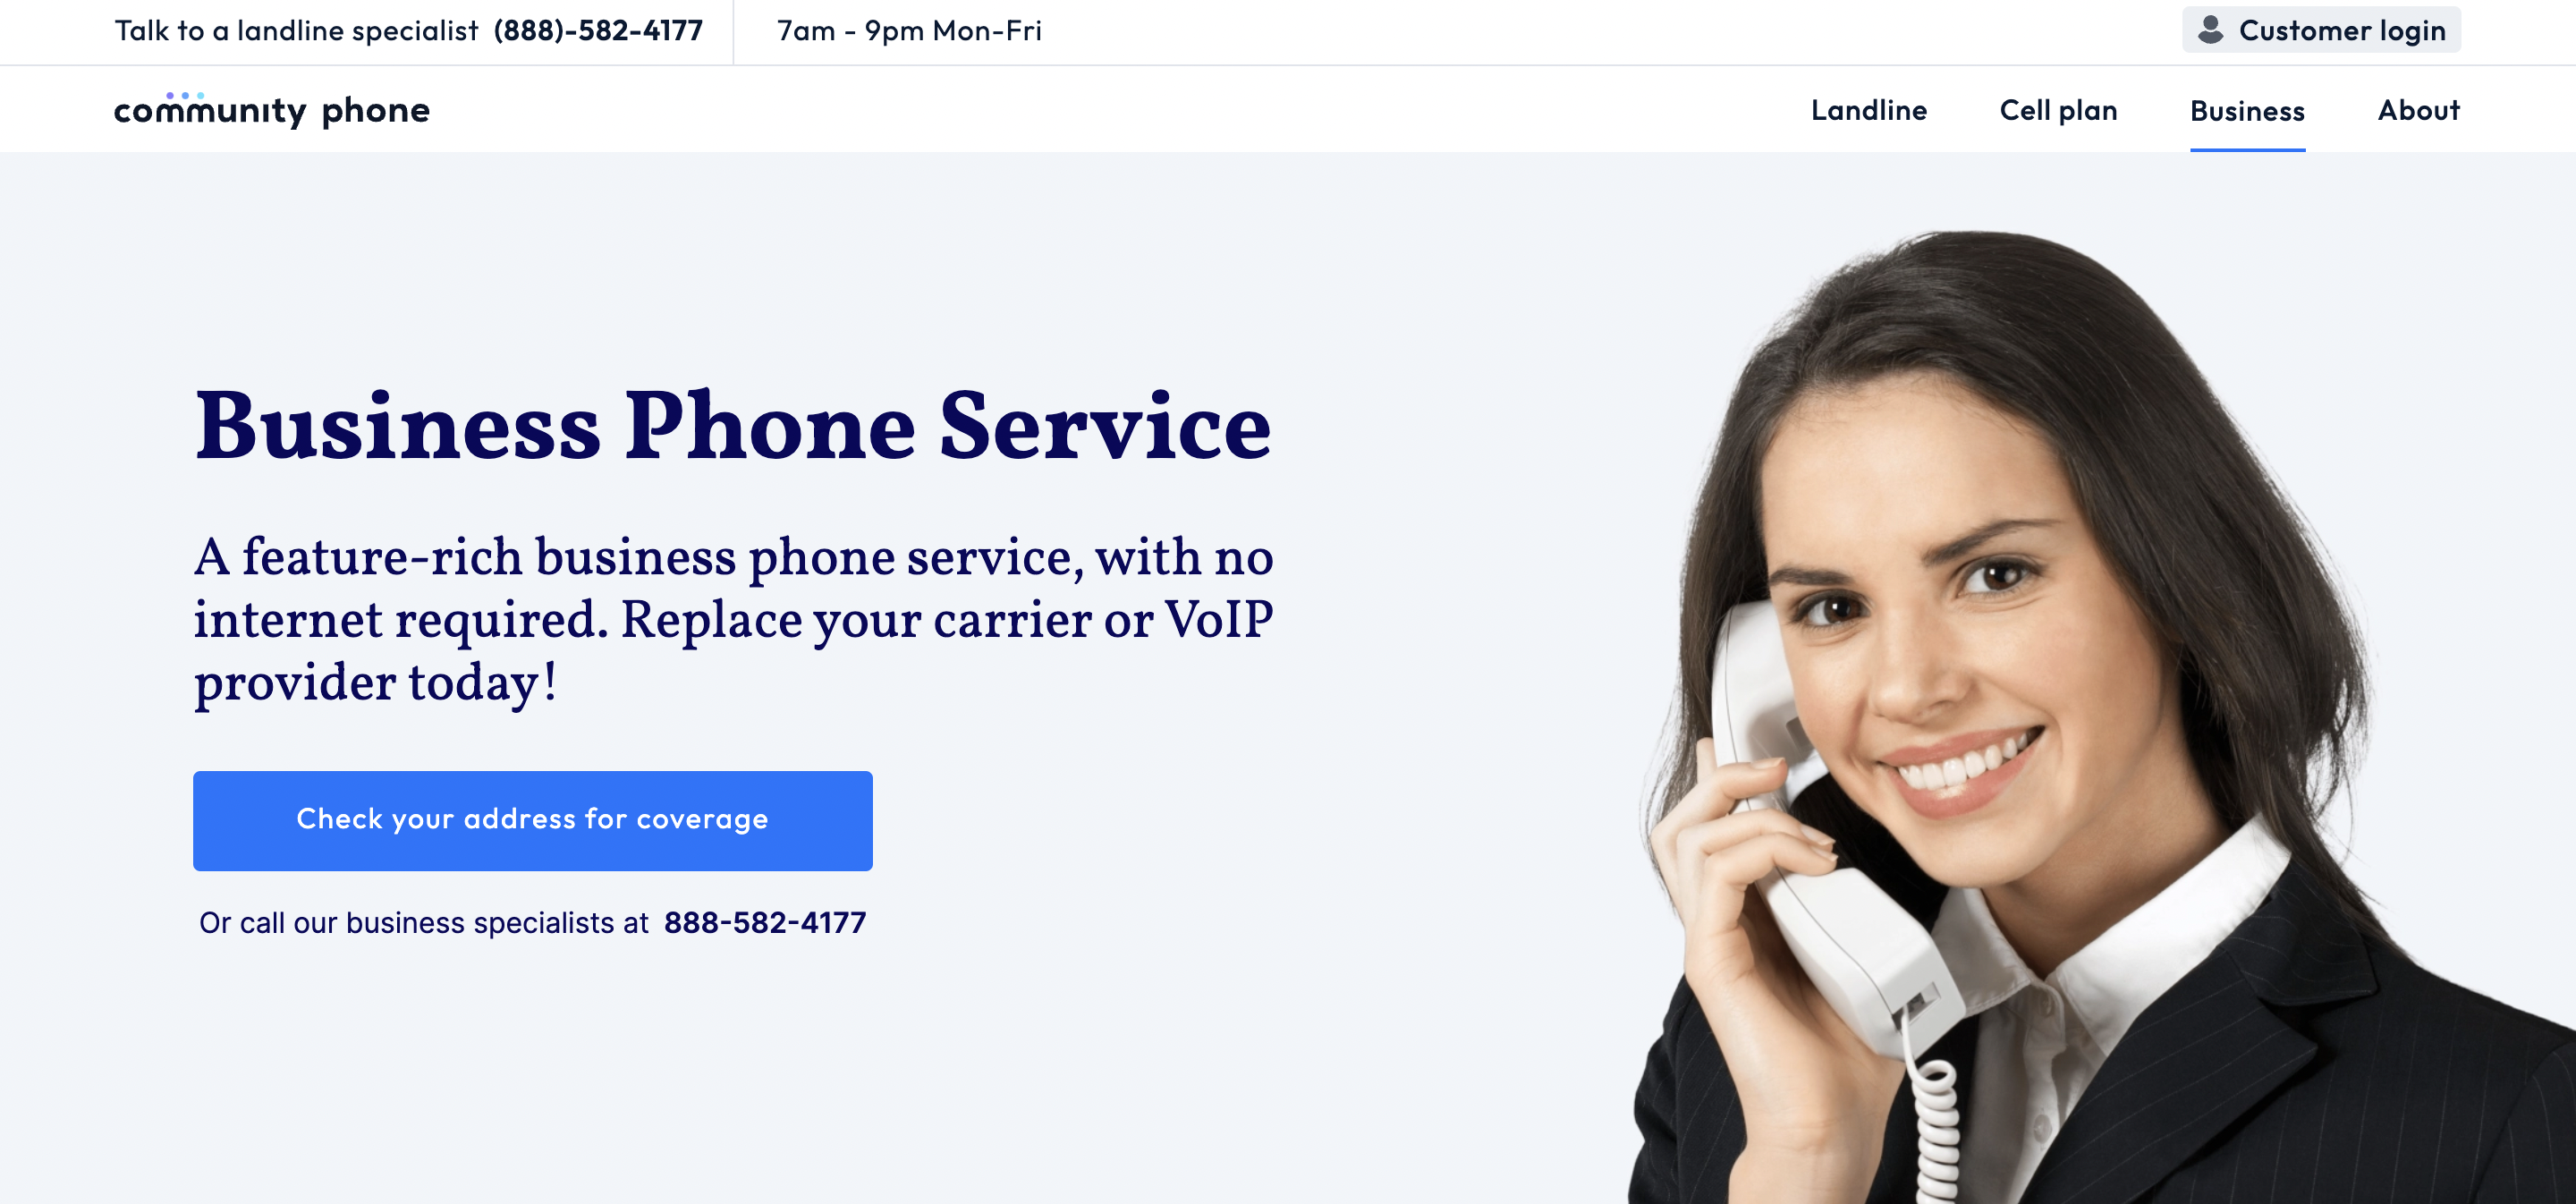 Community Phone Business Phone Service